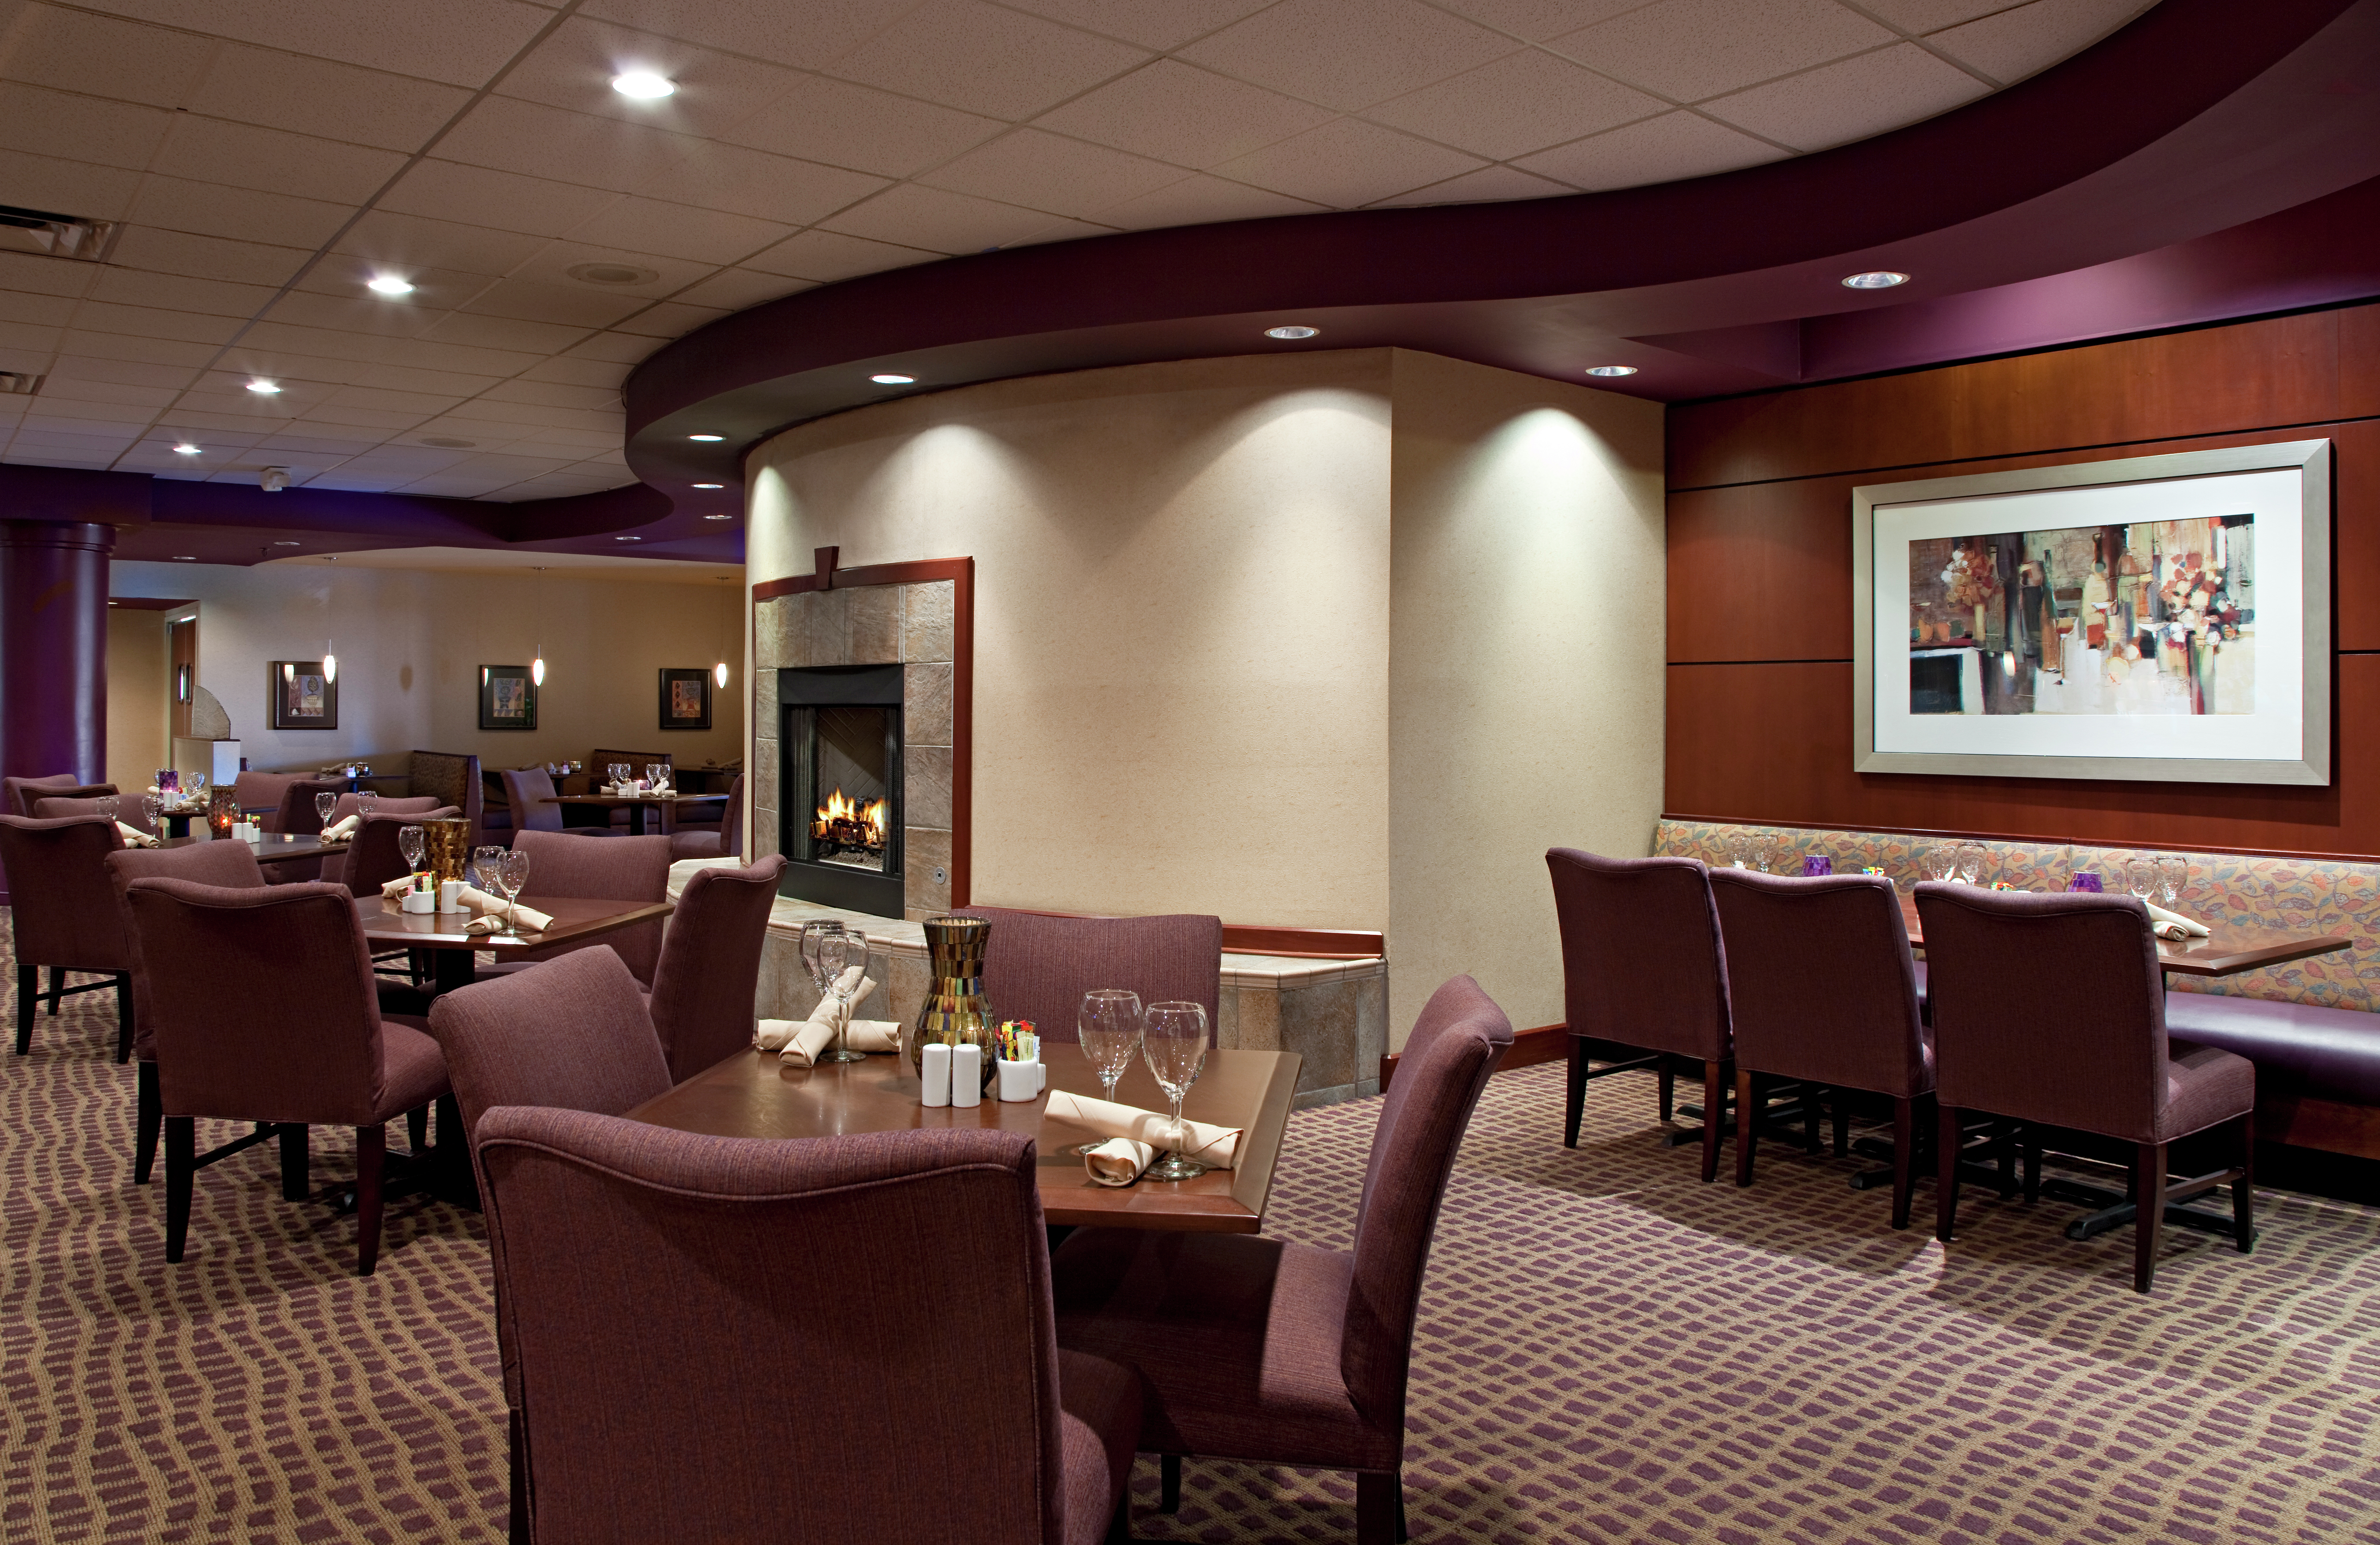 The Bistro Restaurant & Lounge